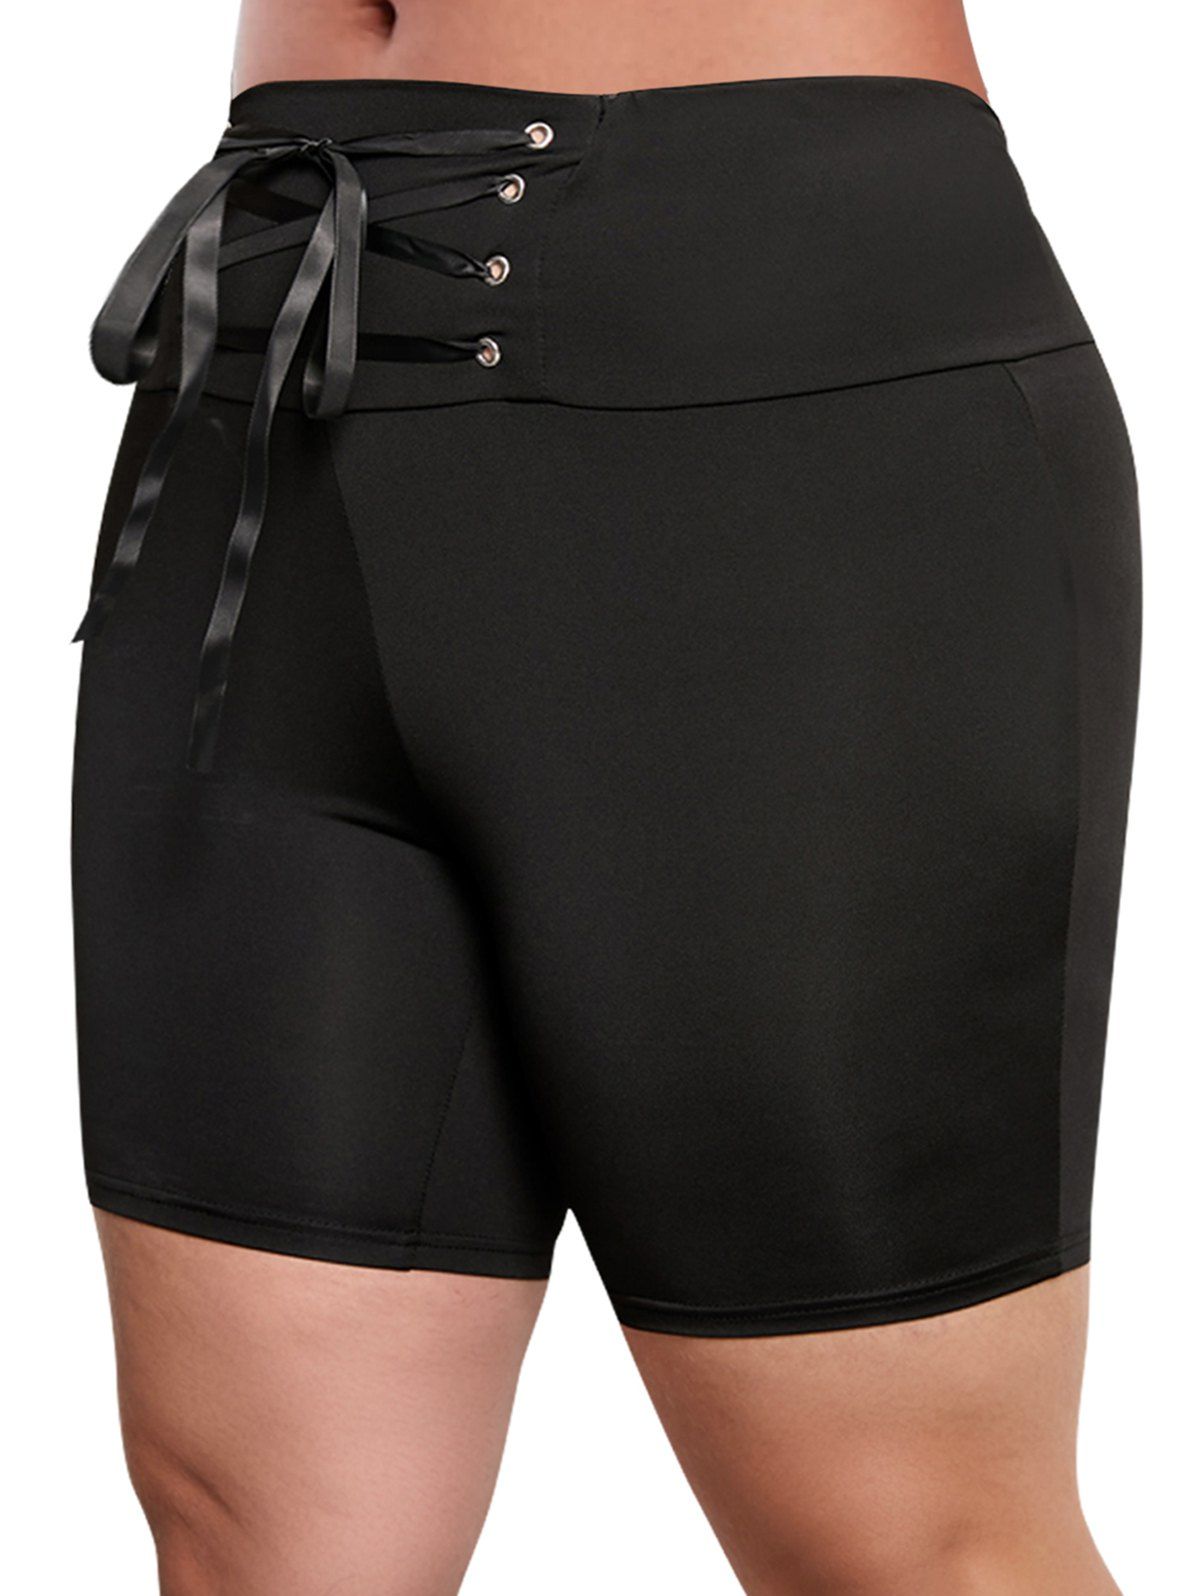 Plus Size Skinny Shorts Grommet Lace Up Solid Color Elastic Waist Summer Shorts - BLACK 1XL